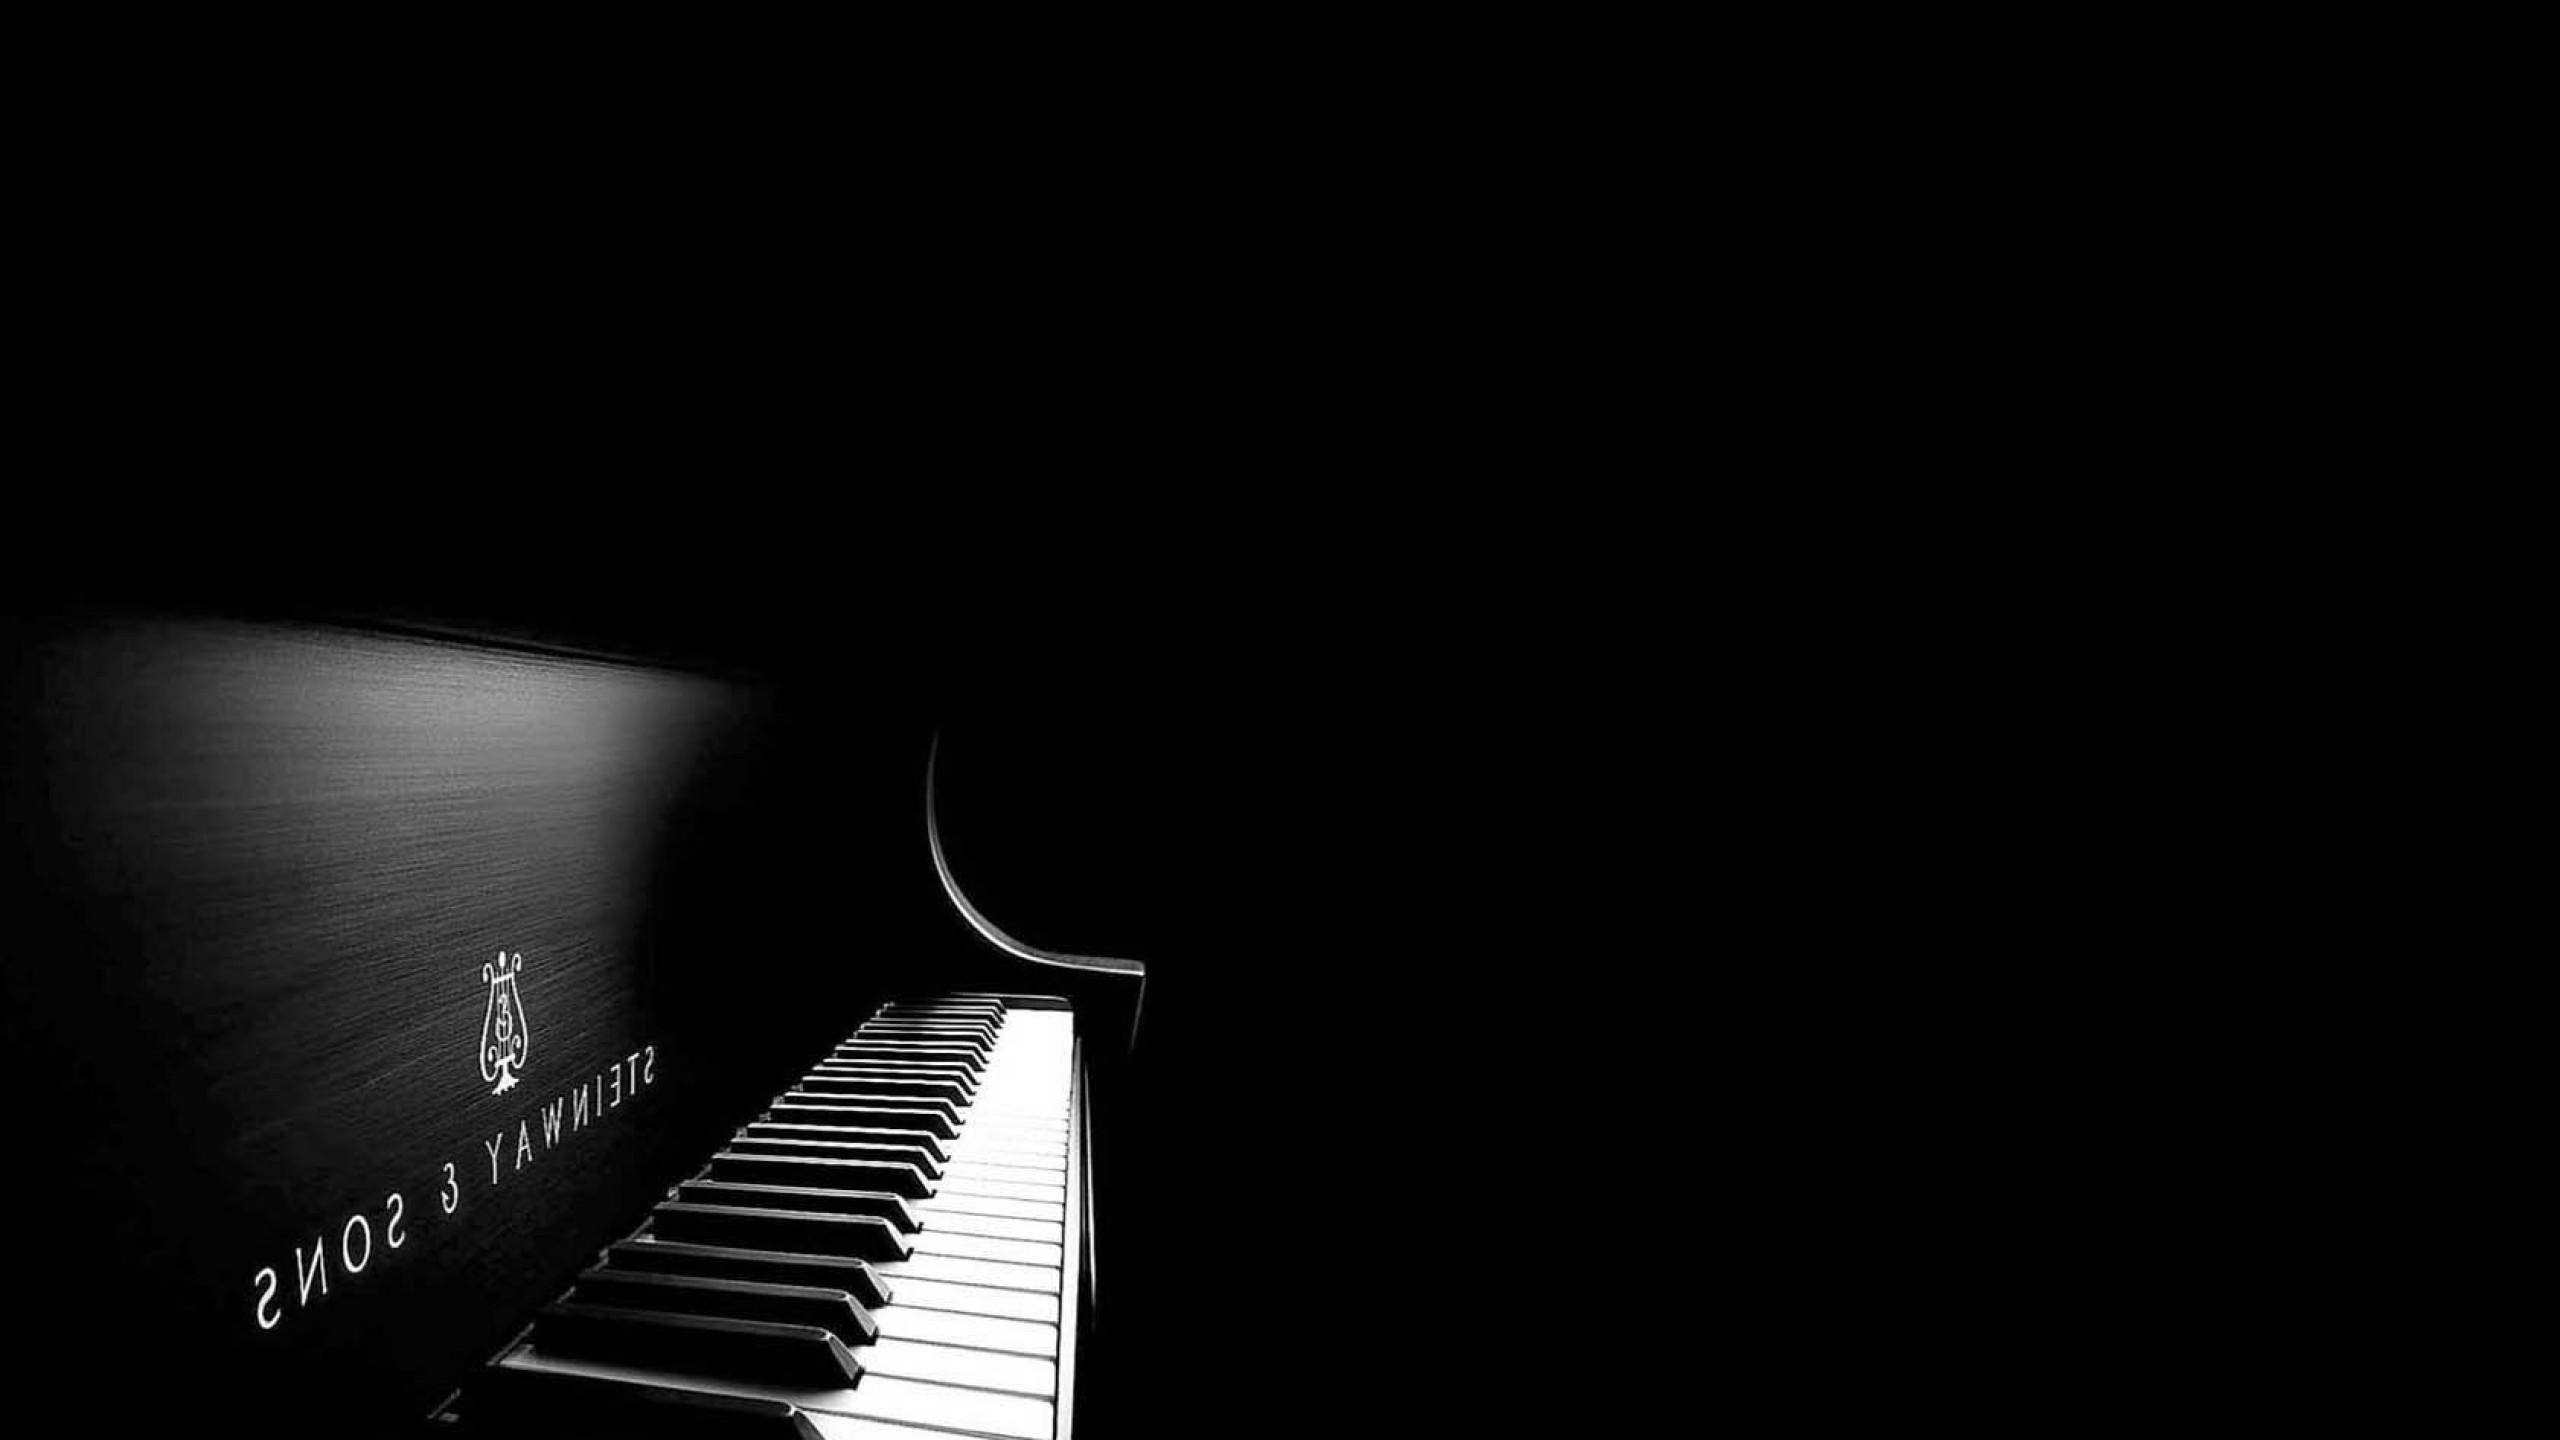 Piano, HD Image download free